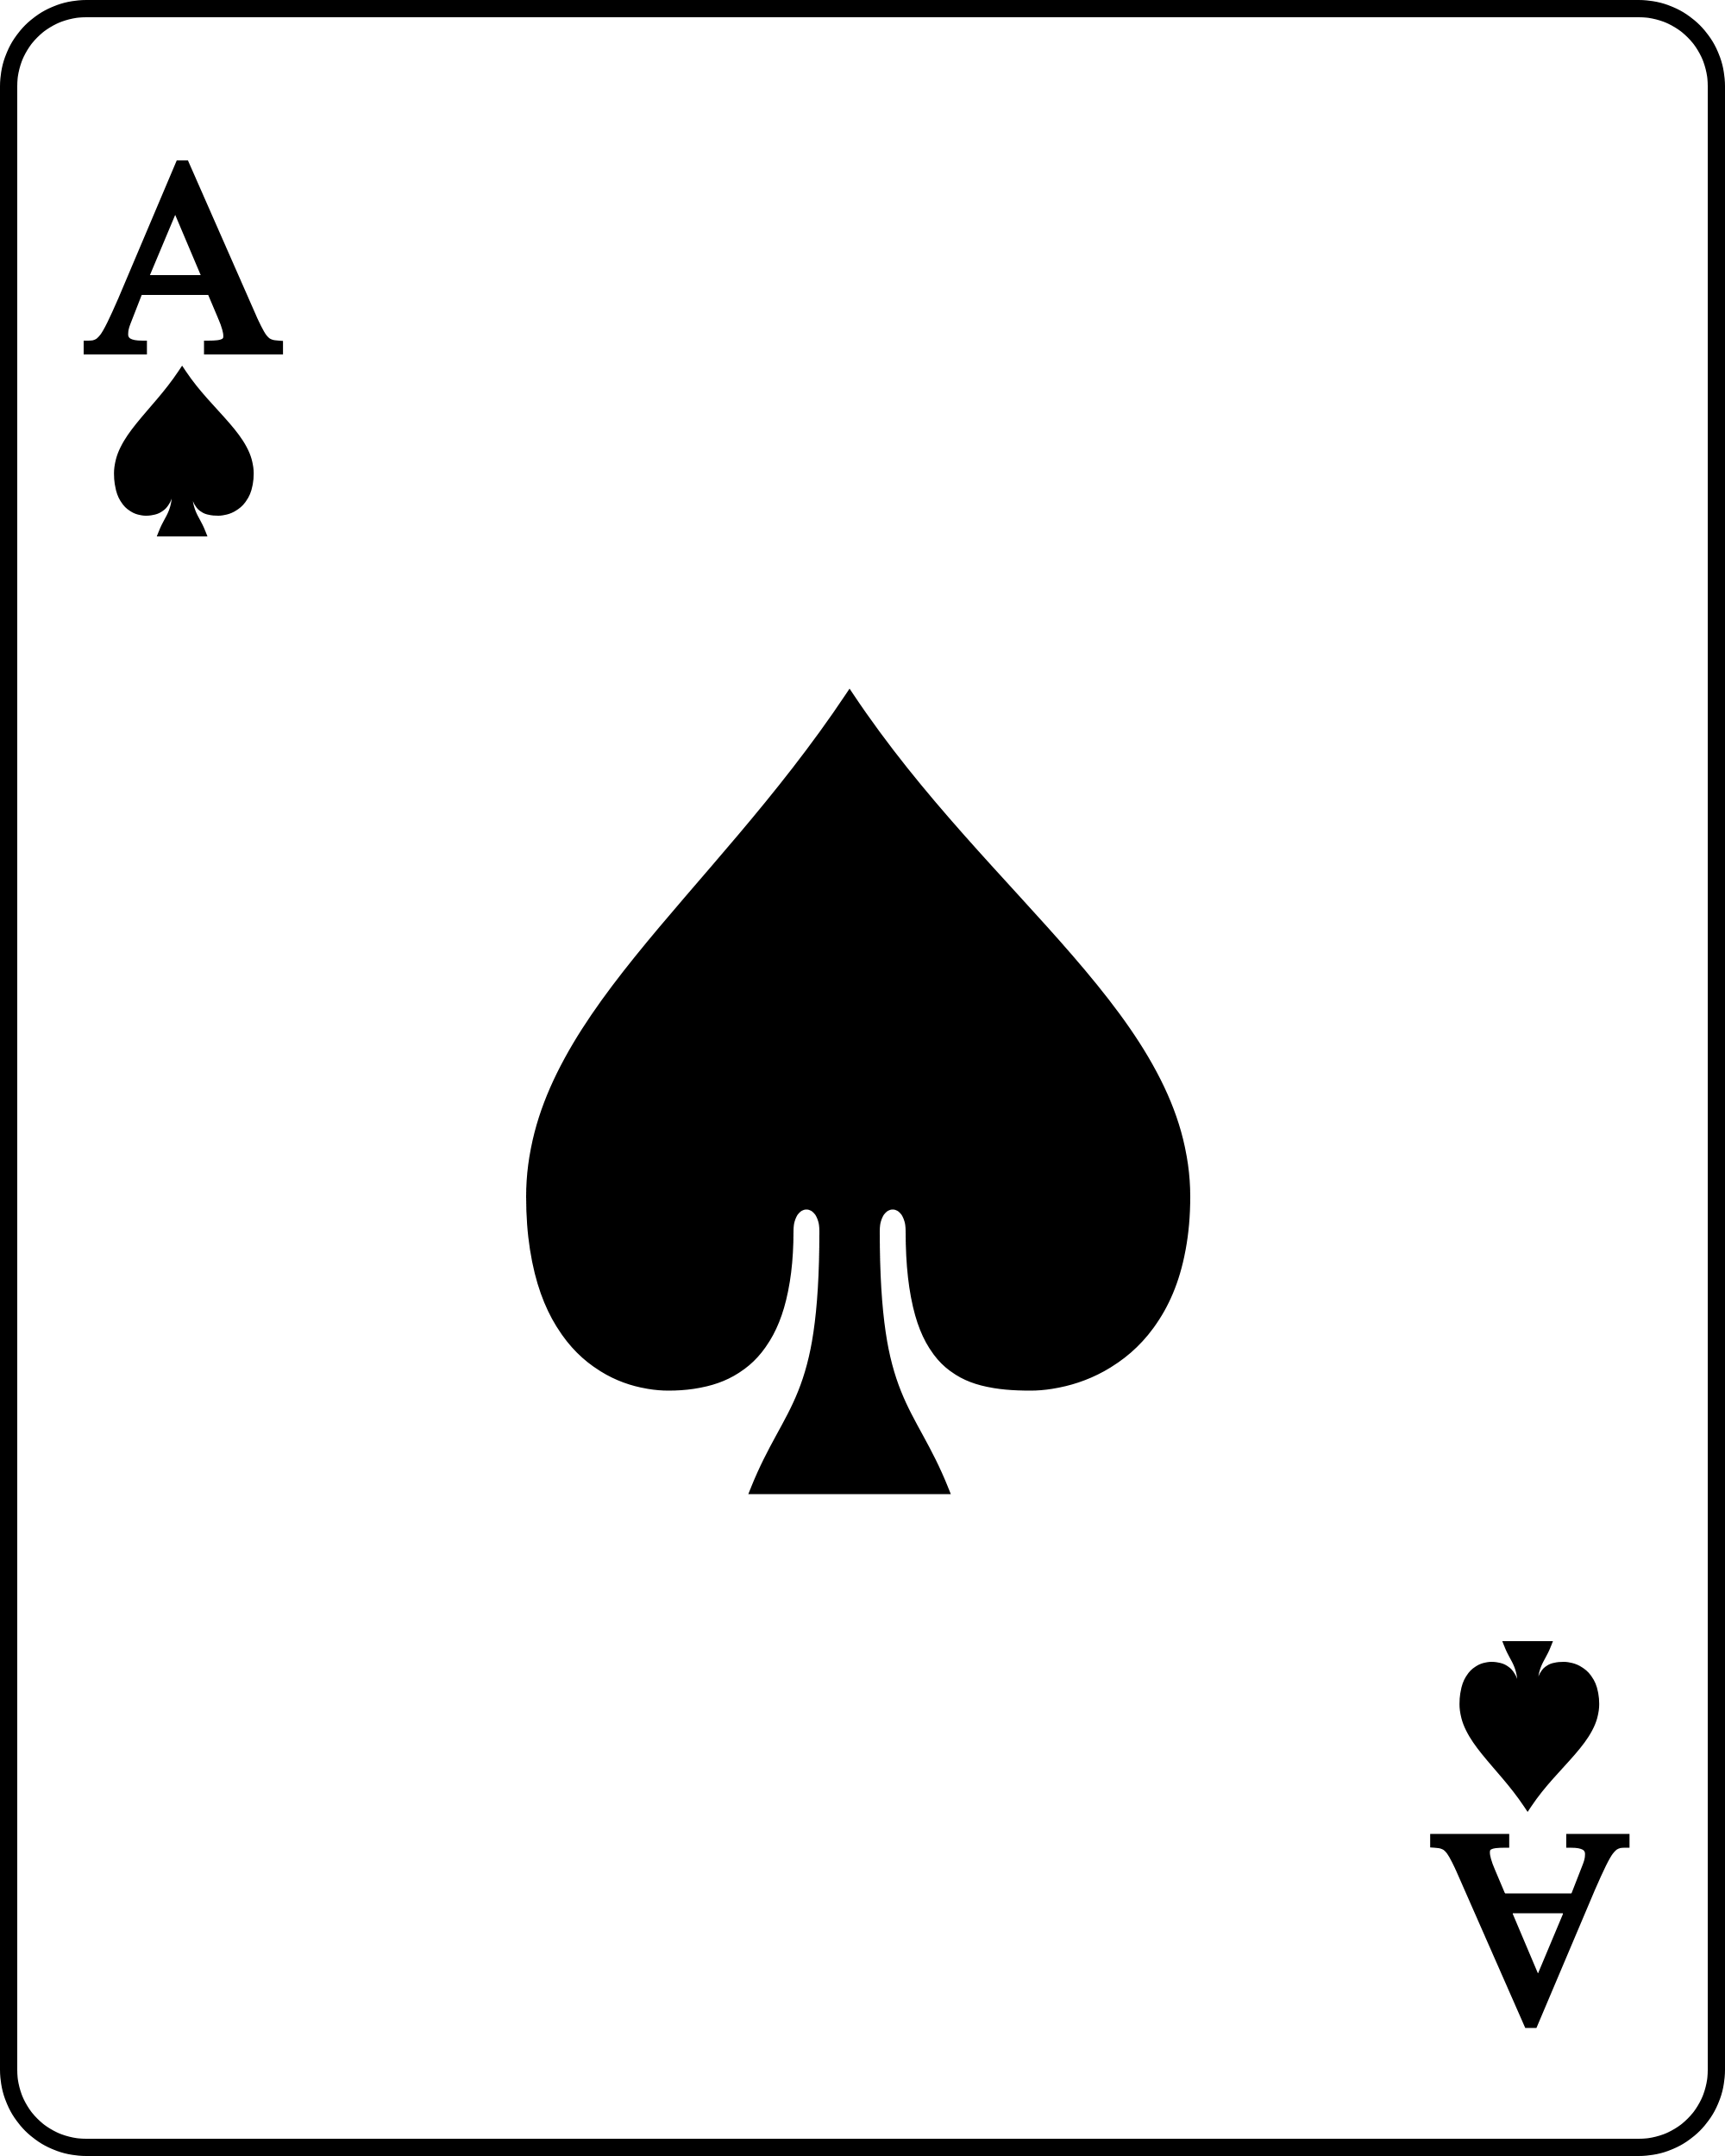 card clipart aces